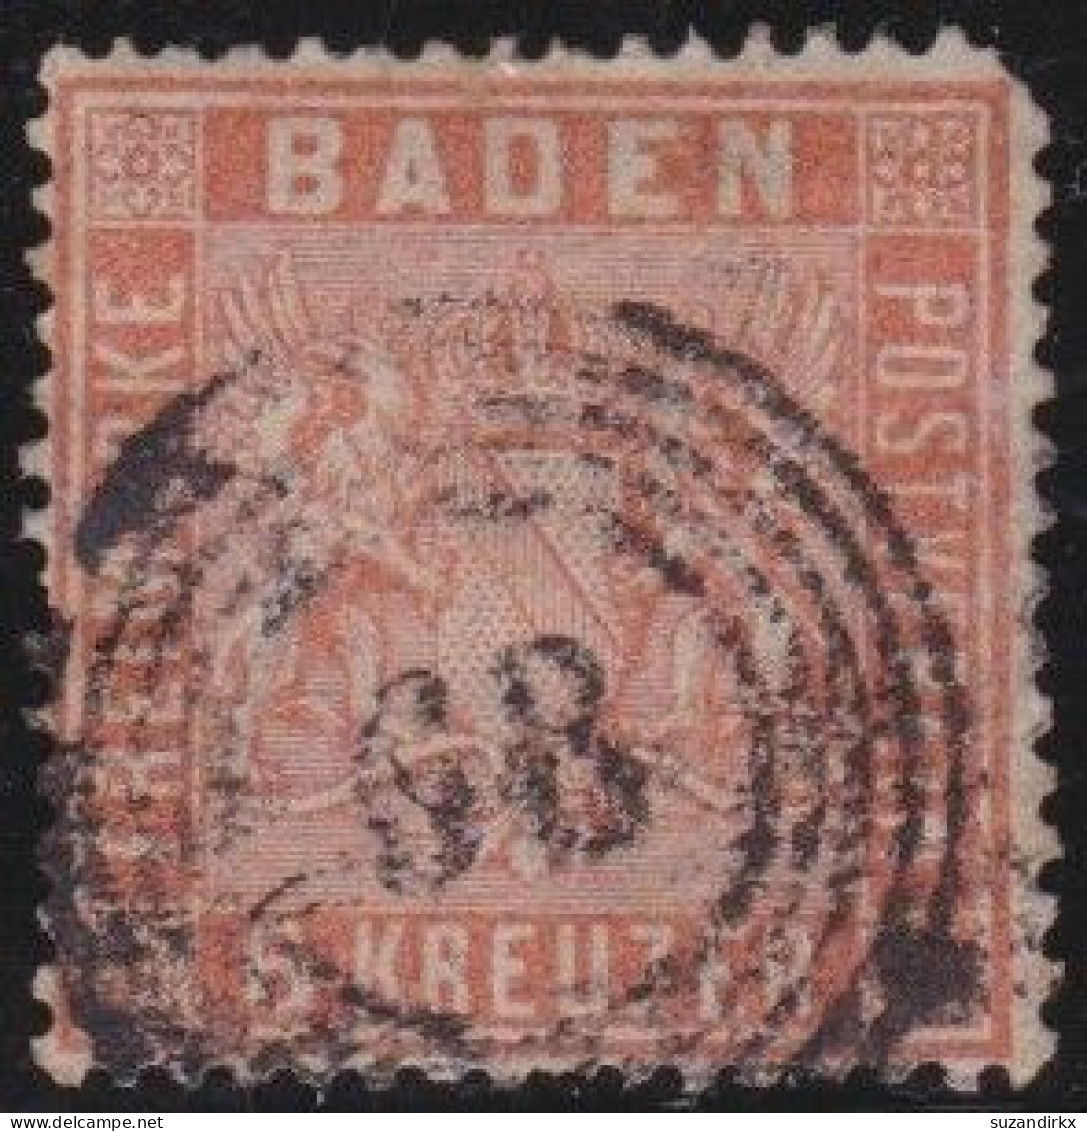 Baden    -     Michel   -   11  (2 Scans)      -    O       -   Gestempelt - Used